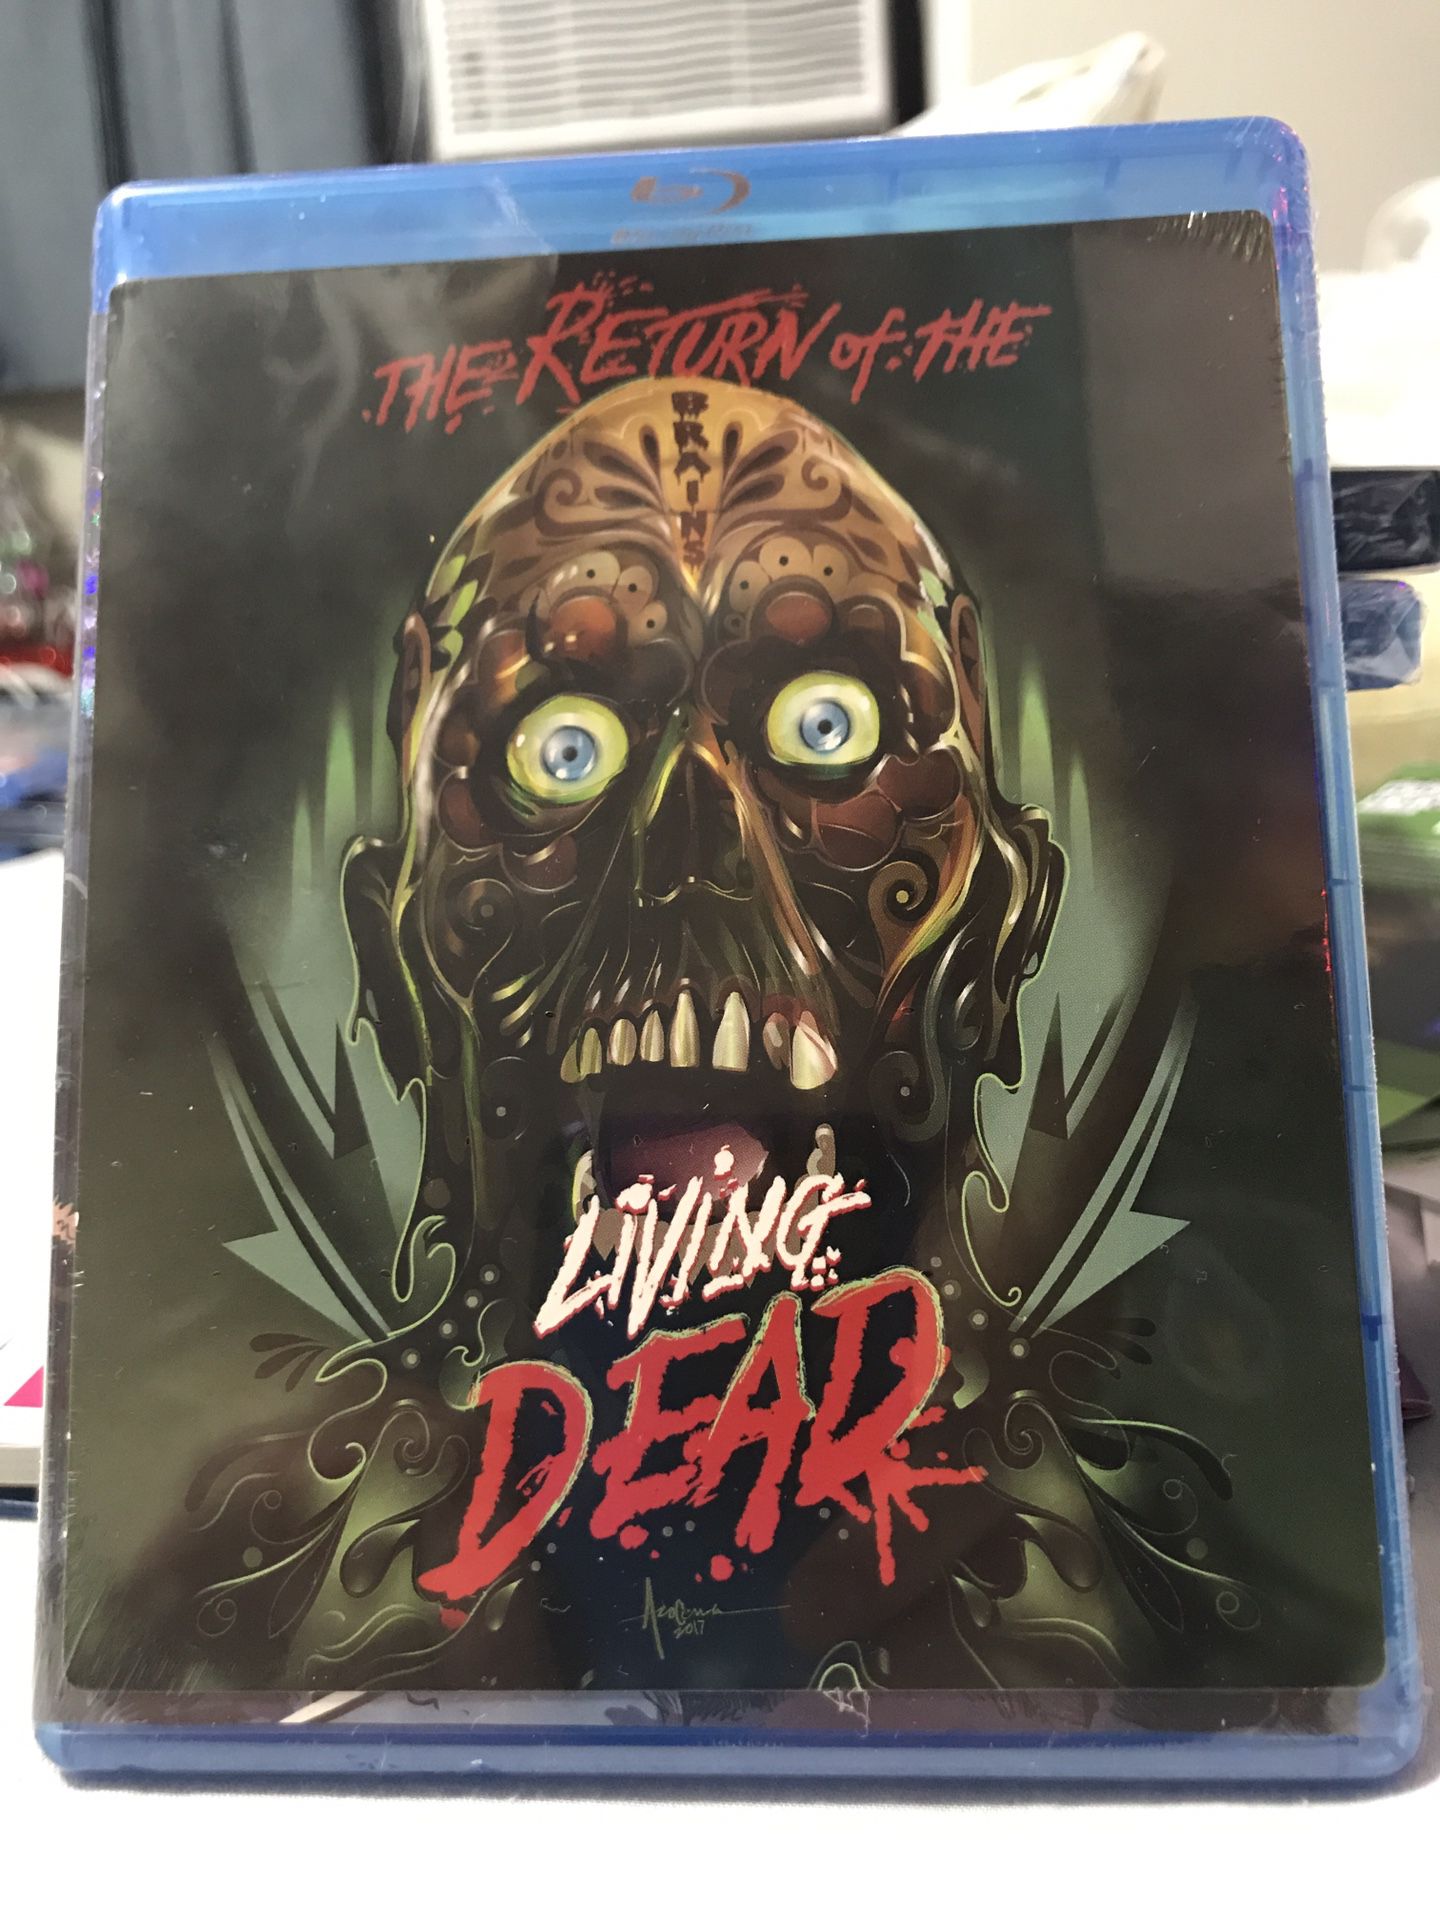 The Return Of The Living Dead - BluRay DVD